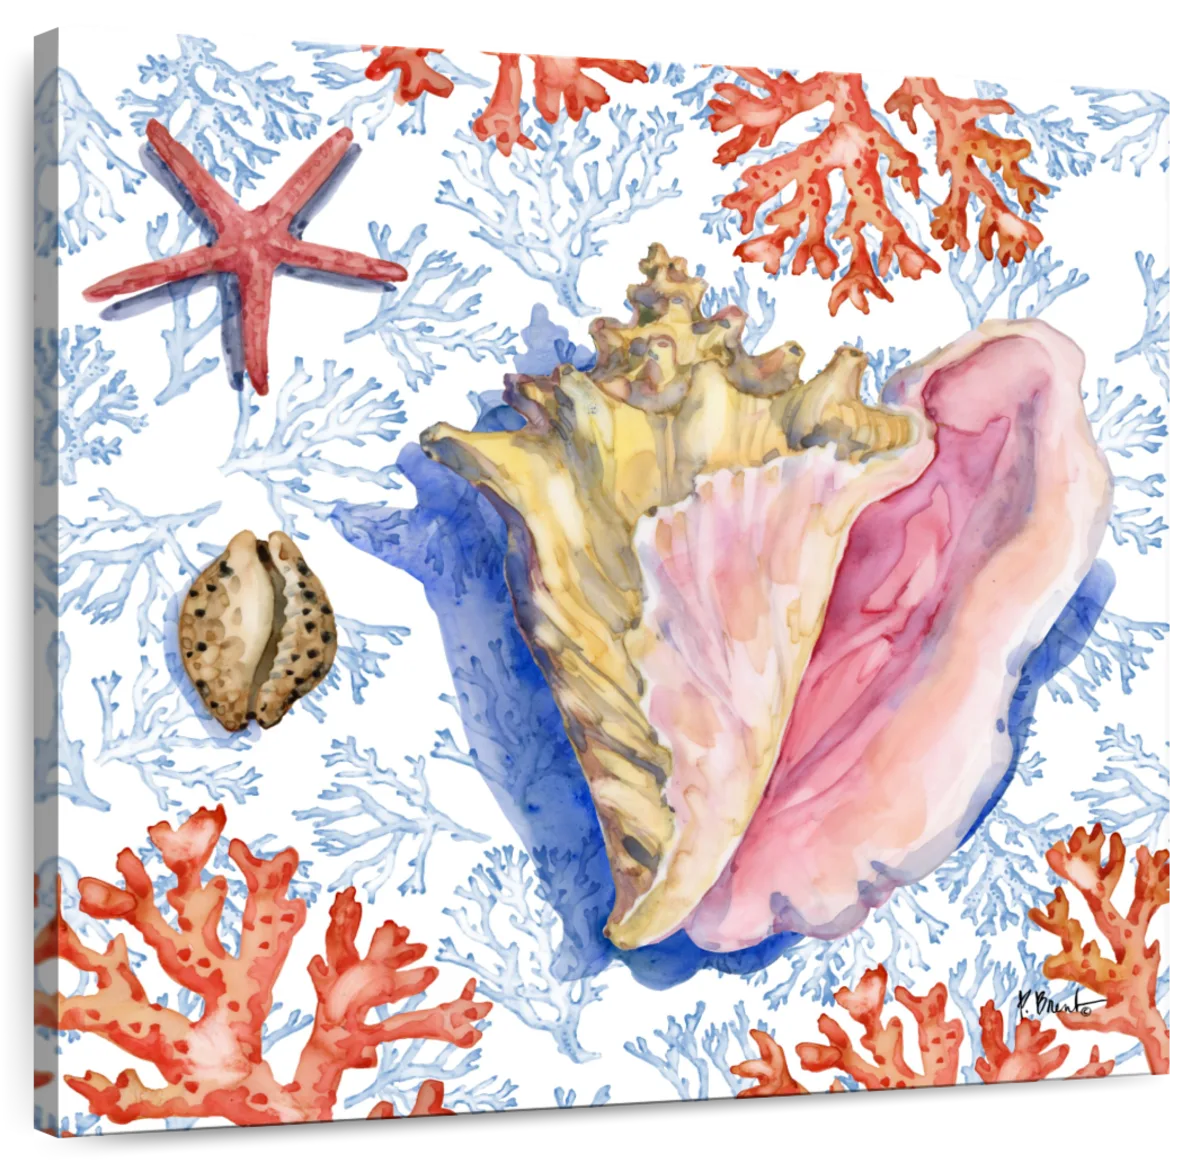 Starfish and Sea Shells III print by Editors Choice